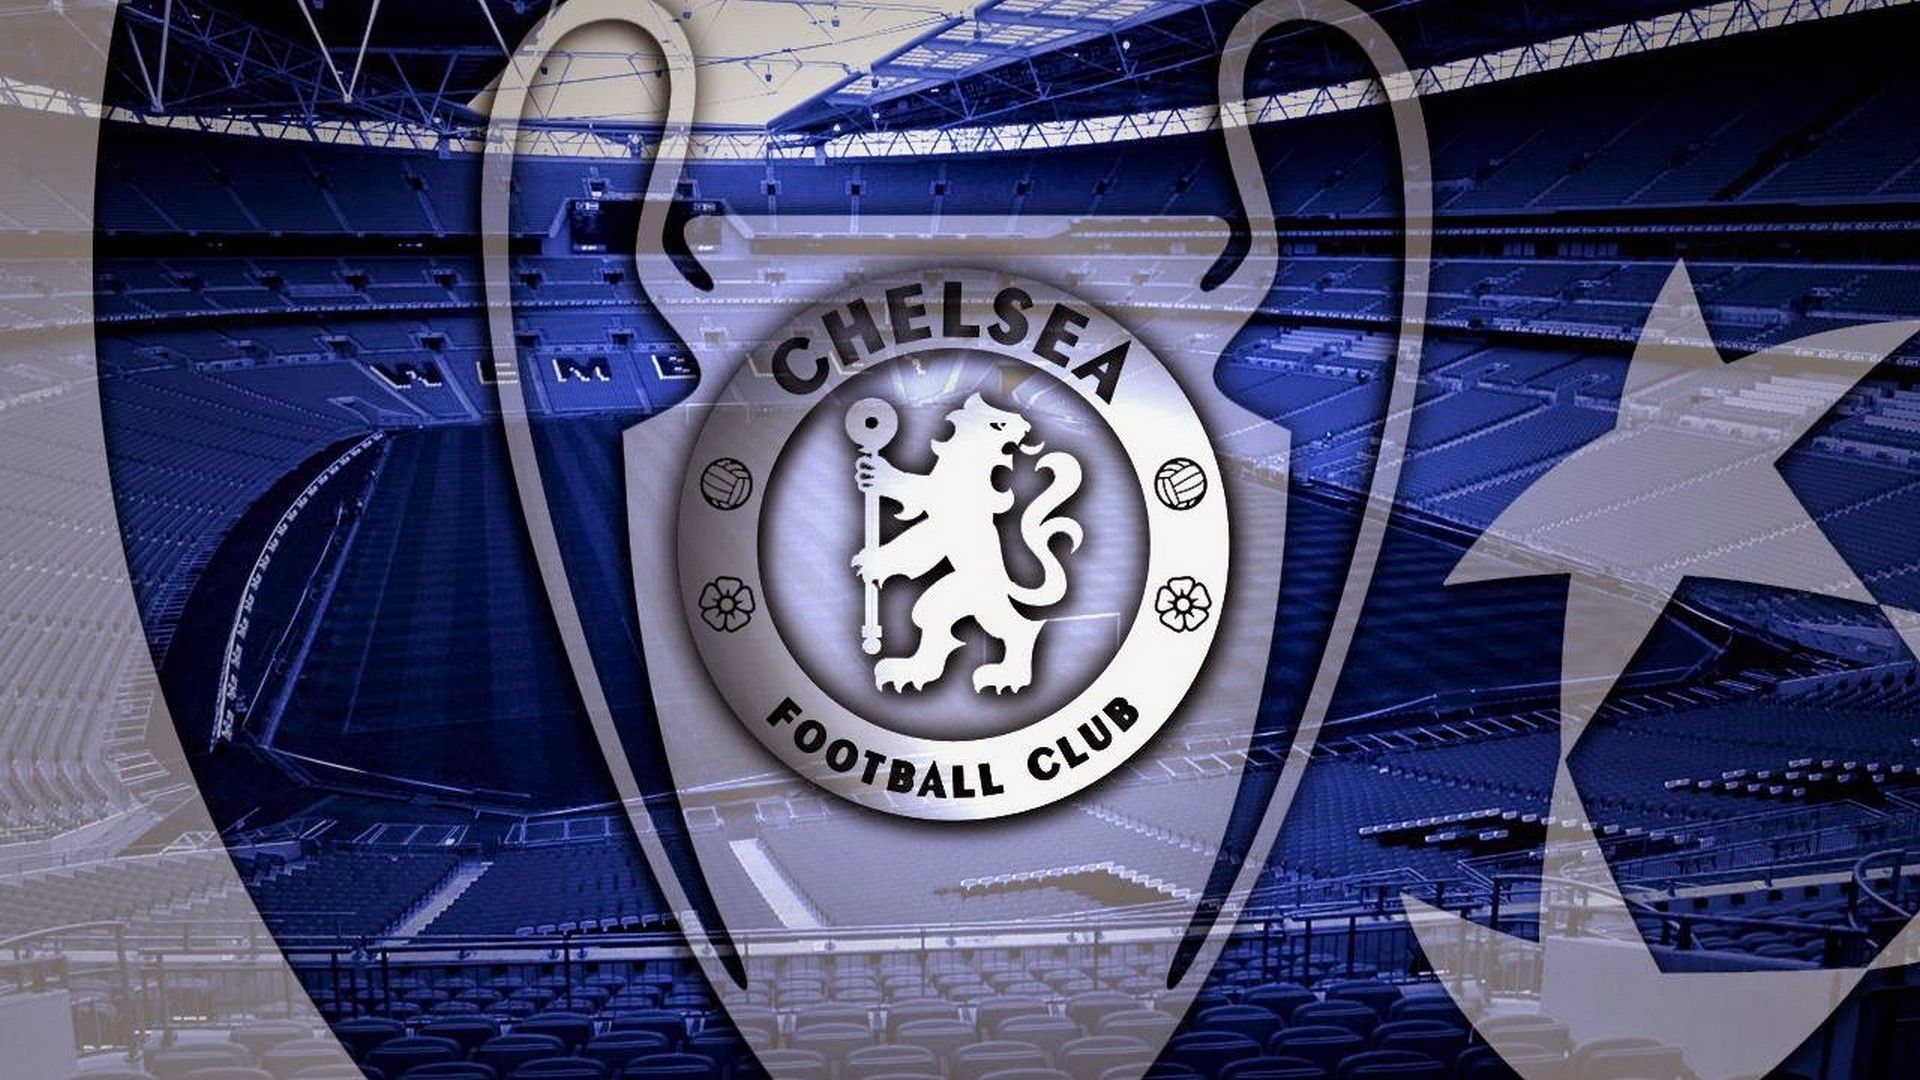 Chelsea Champions League Wallpaper Football Wallpaper. Chelsea football club wallpaper, Chelsea football, Chelsea champions league